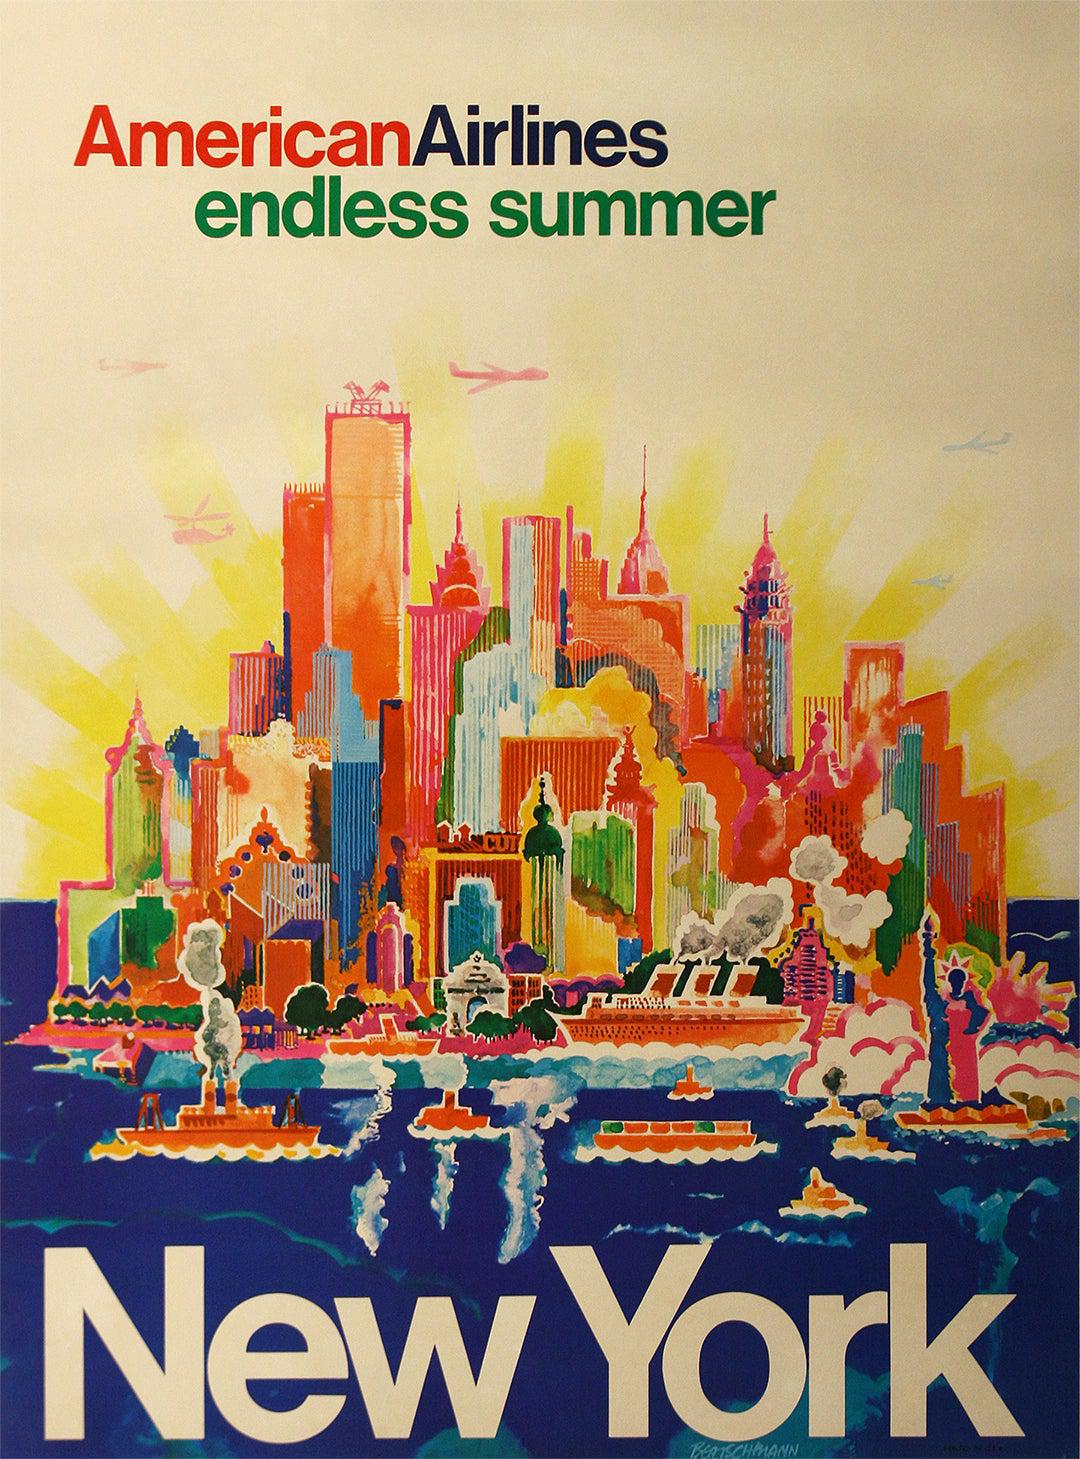 Original Vintage American Airlines New York Travel Poster c1970 Endless Summer Harry Bertschmann